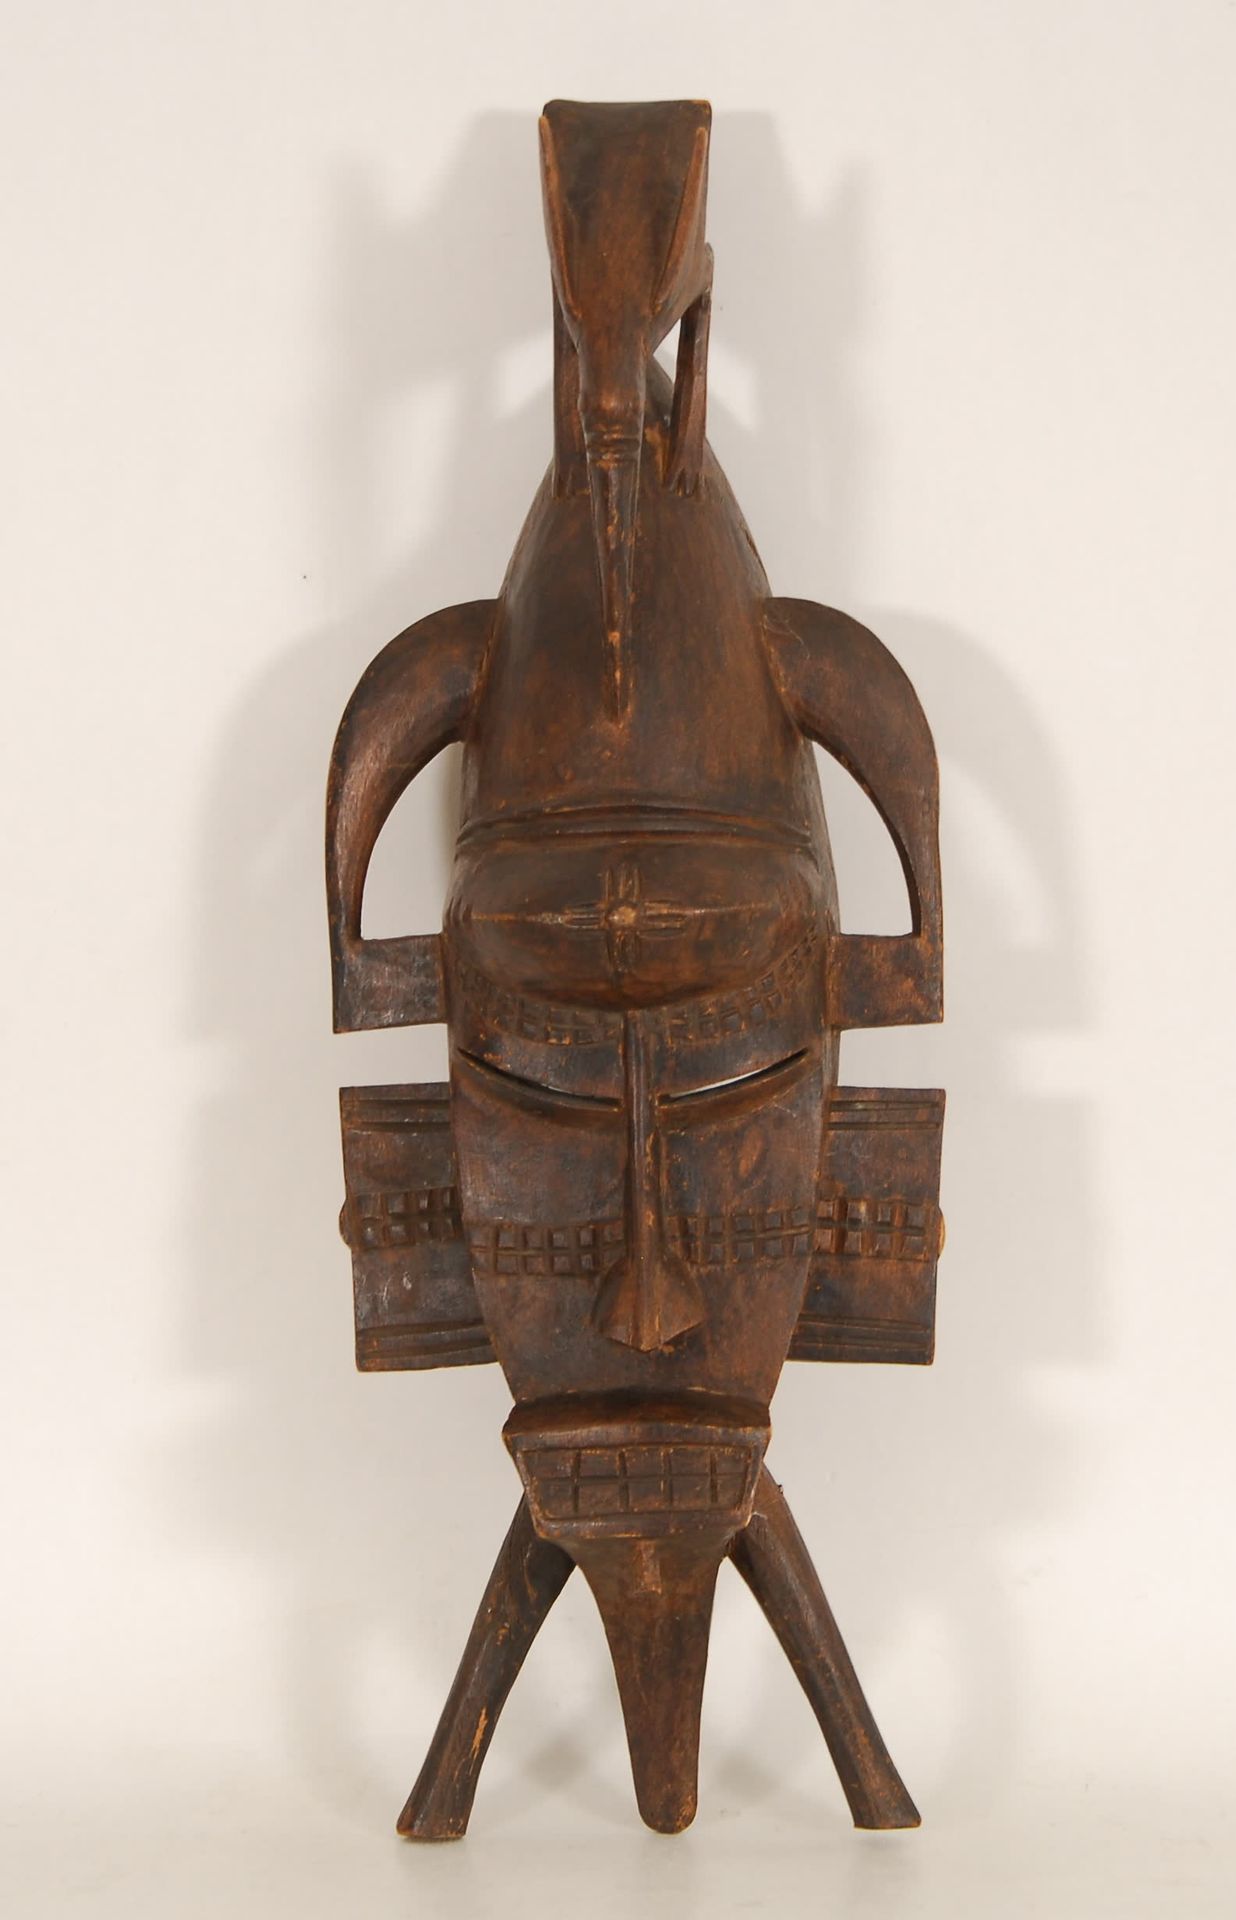 Afrique - Africa Mask
Sculpted wood, Ivory Coast.
H. 46 cm.